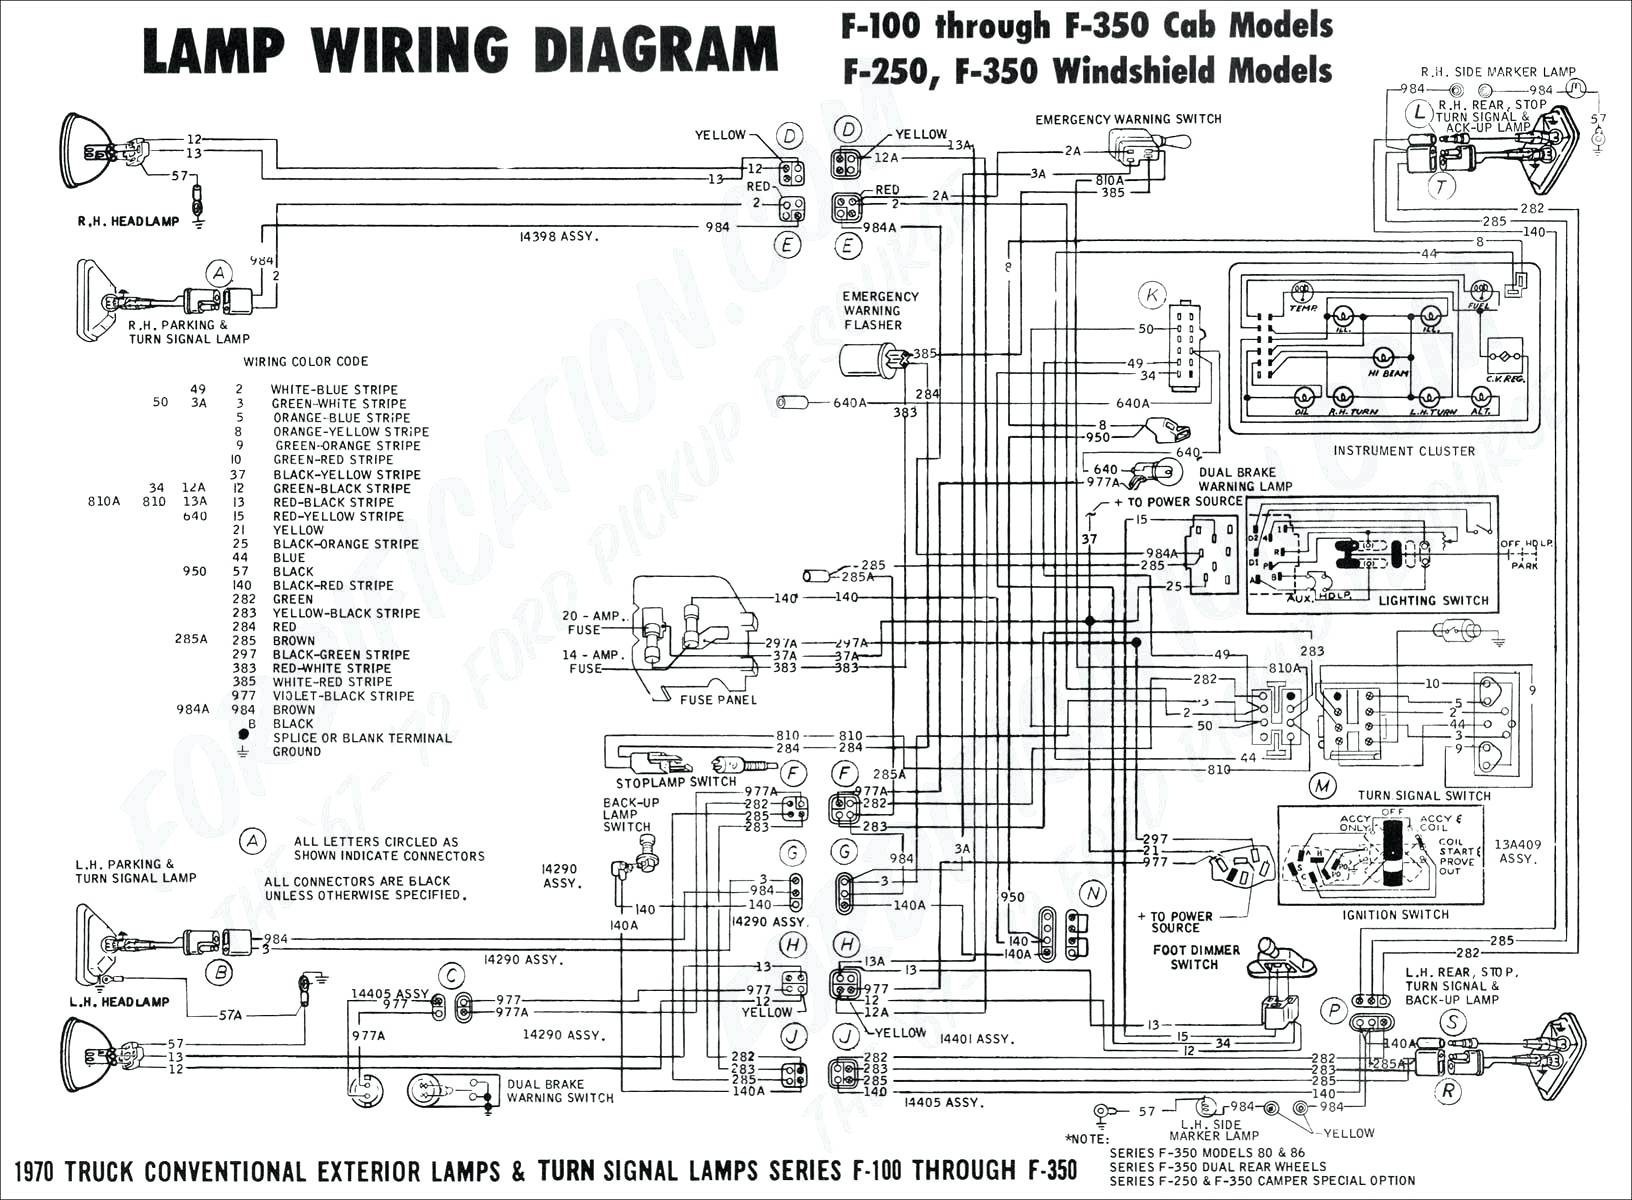 Modine Gas Heater Wiring Diagram Fresh Modine Gas Heater Wiring Diagram Luxury Gas Furnace Wiring Diagram